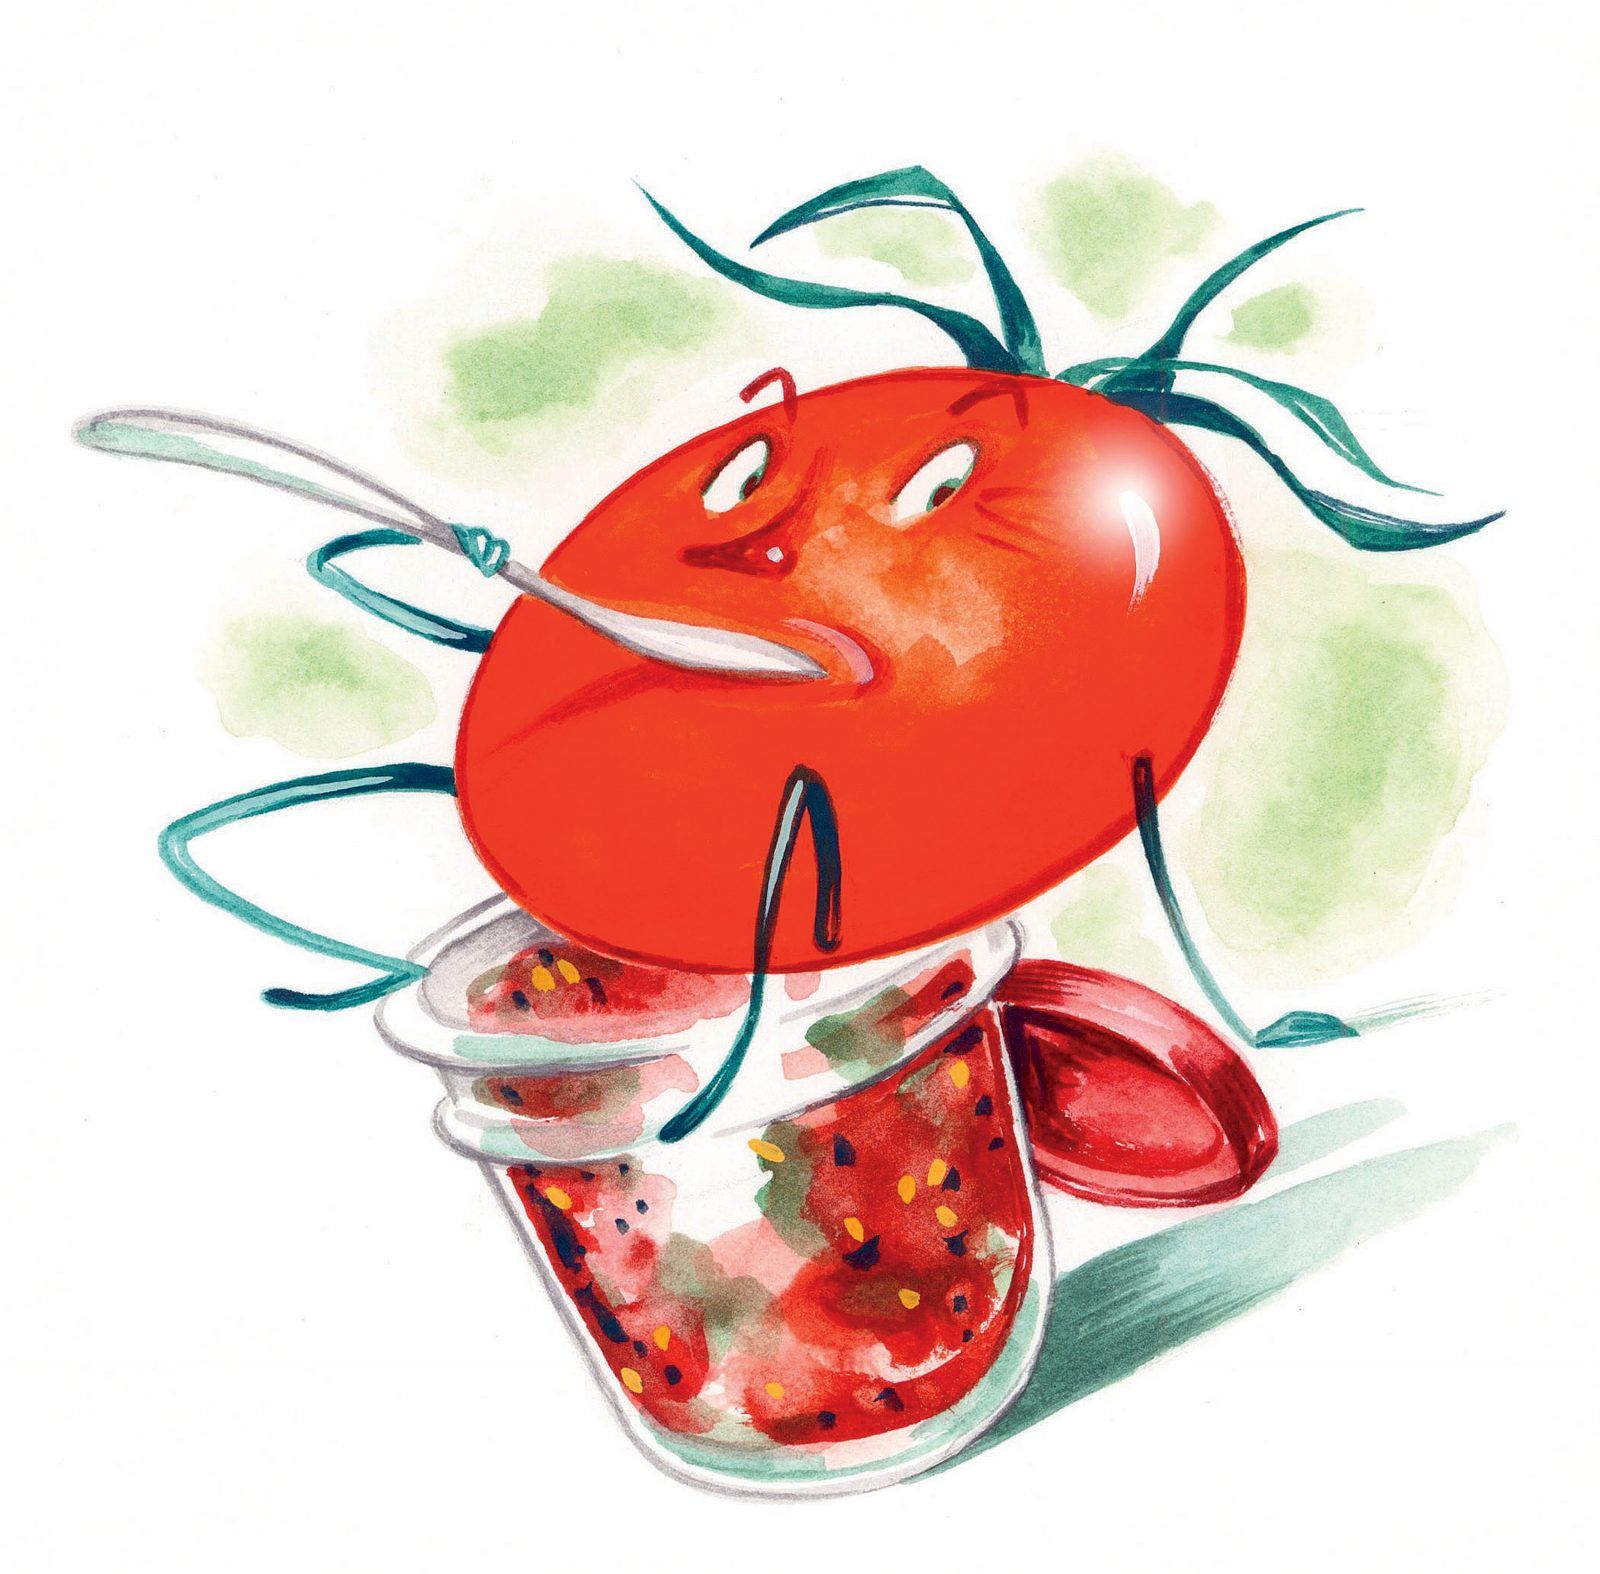 Creole Tomato Jam Recipe